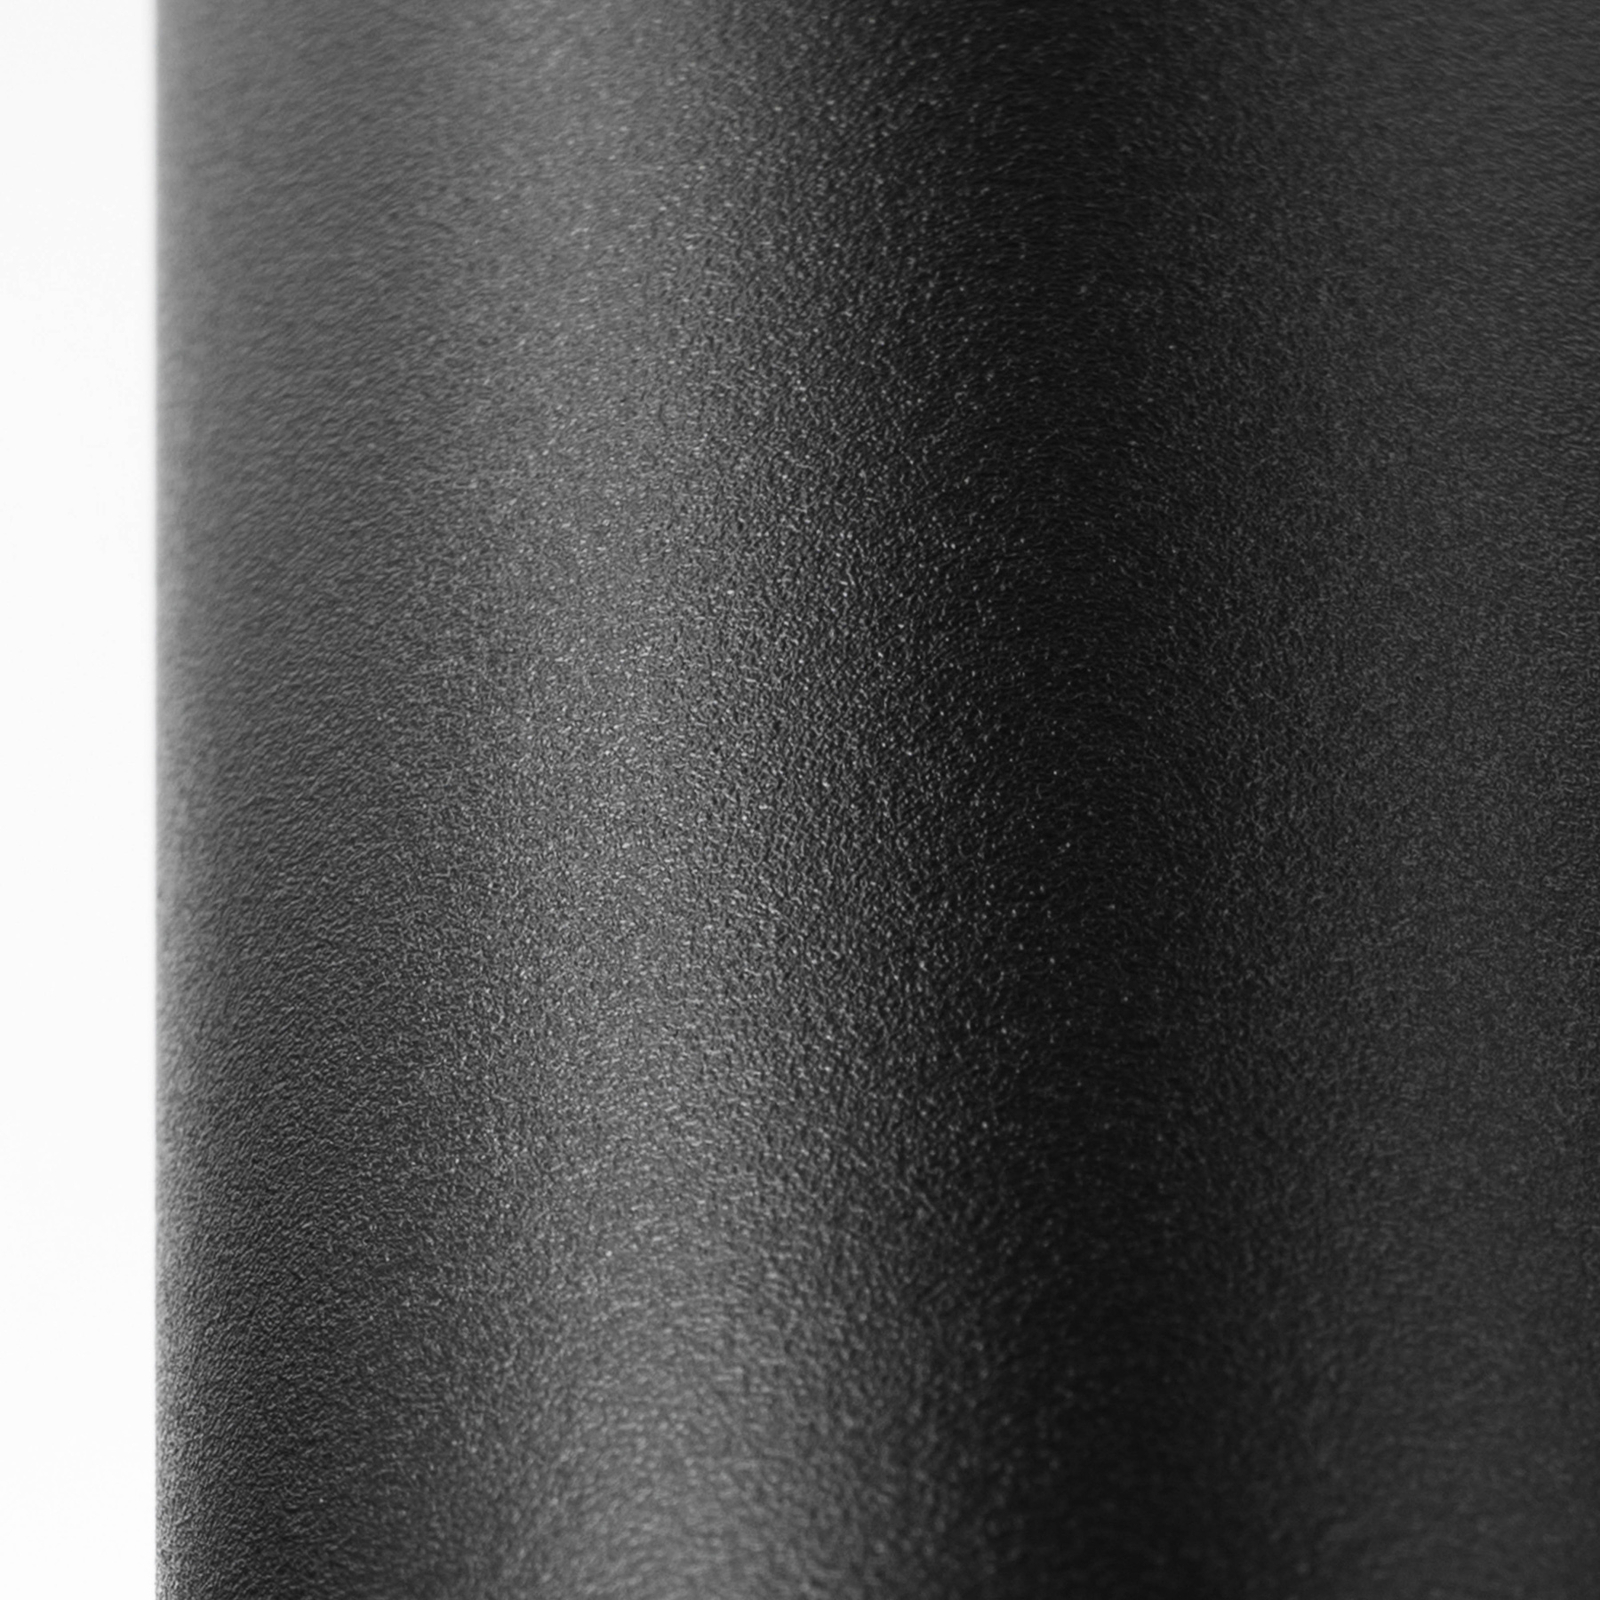 Arcchio Ejona track hanglamp zwart GU10 6/27cm